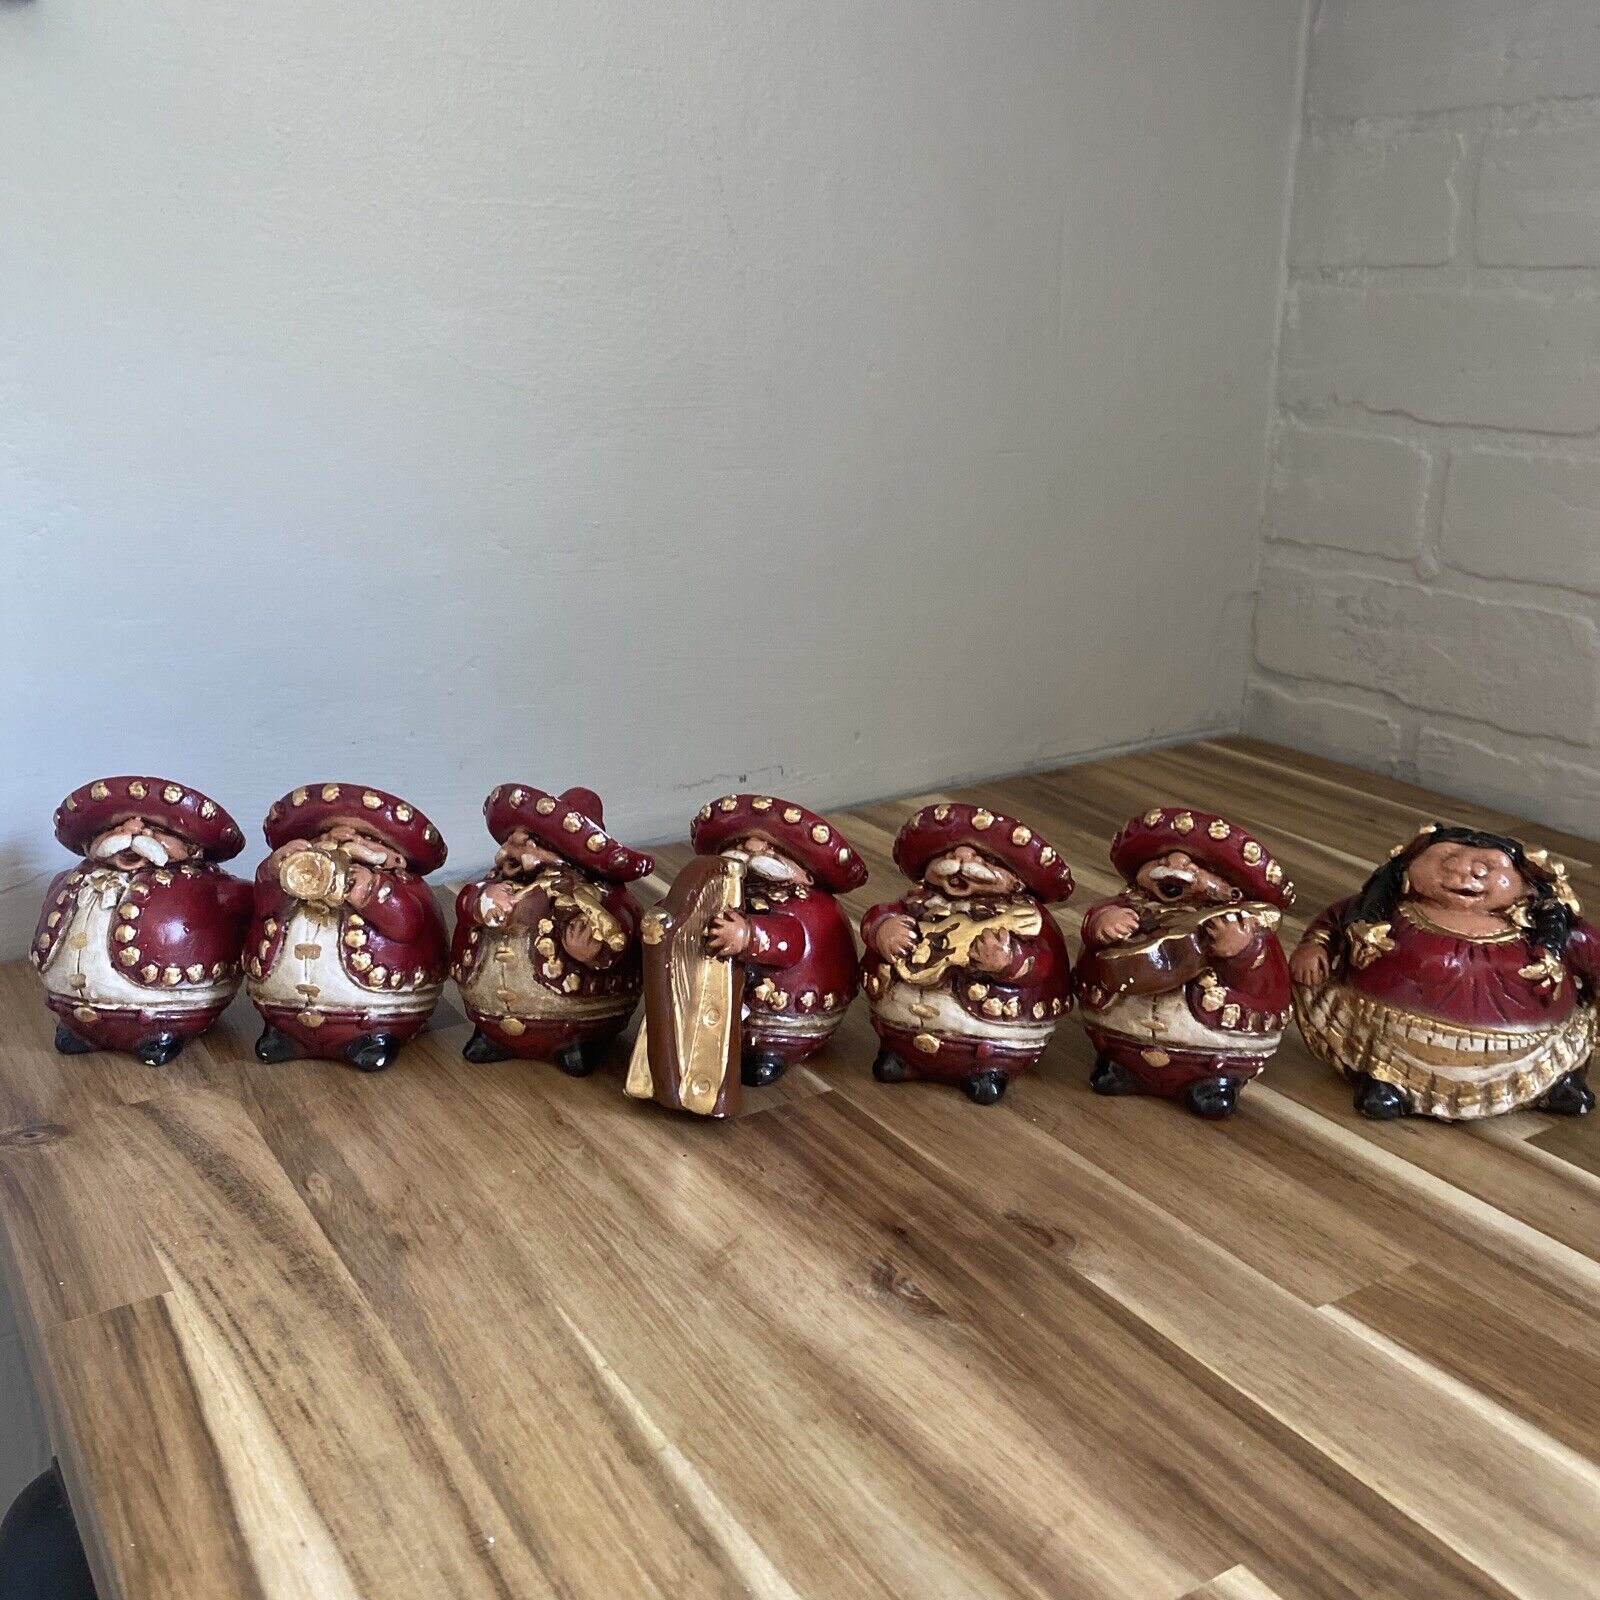 VTG Mariachi Band Mexican Musical Figurines Set of 7 Folk art Fat Instruments